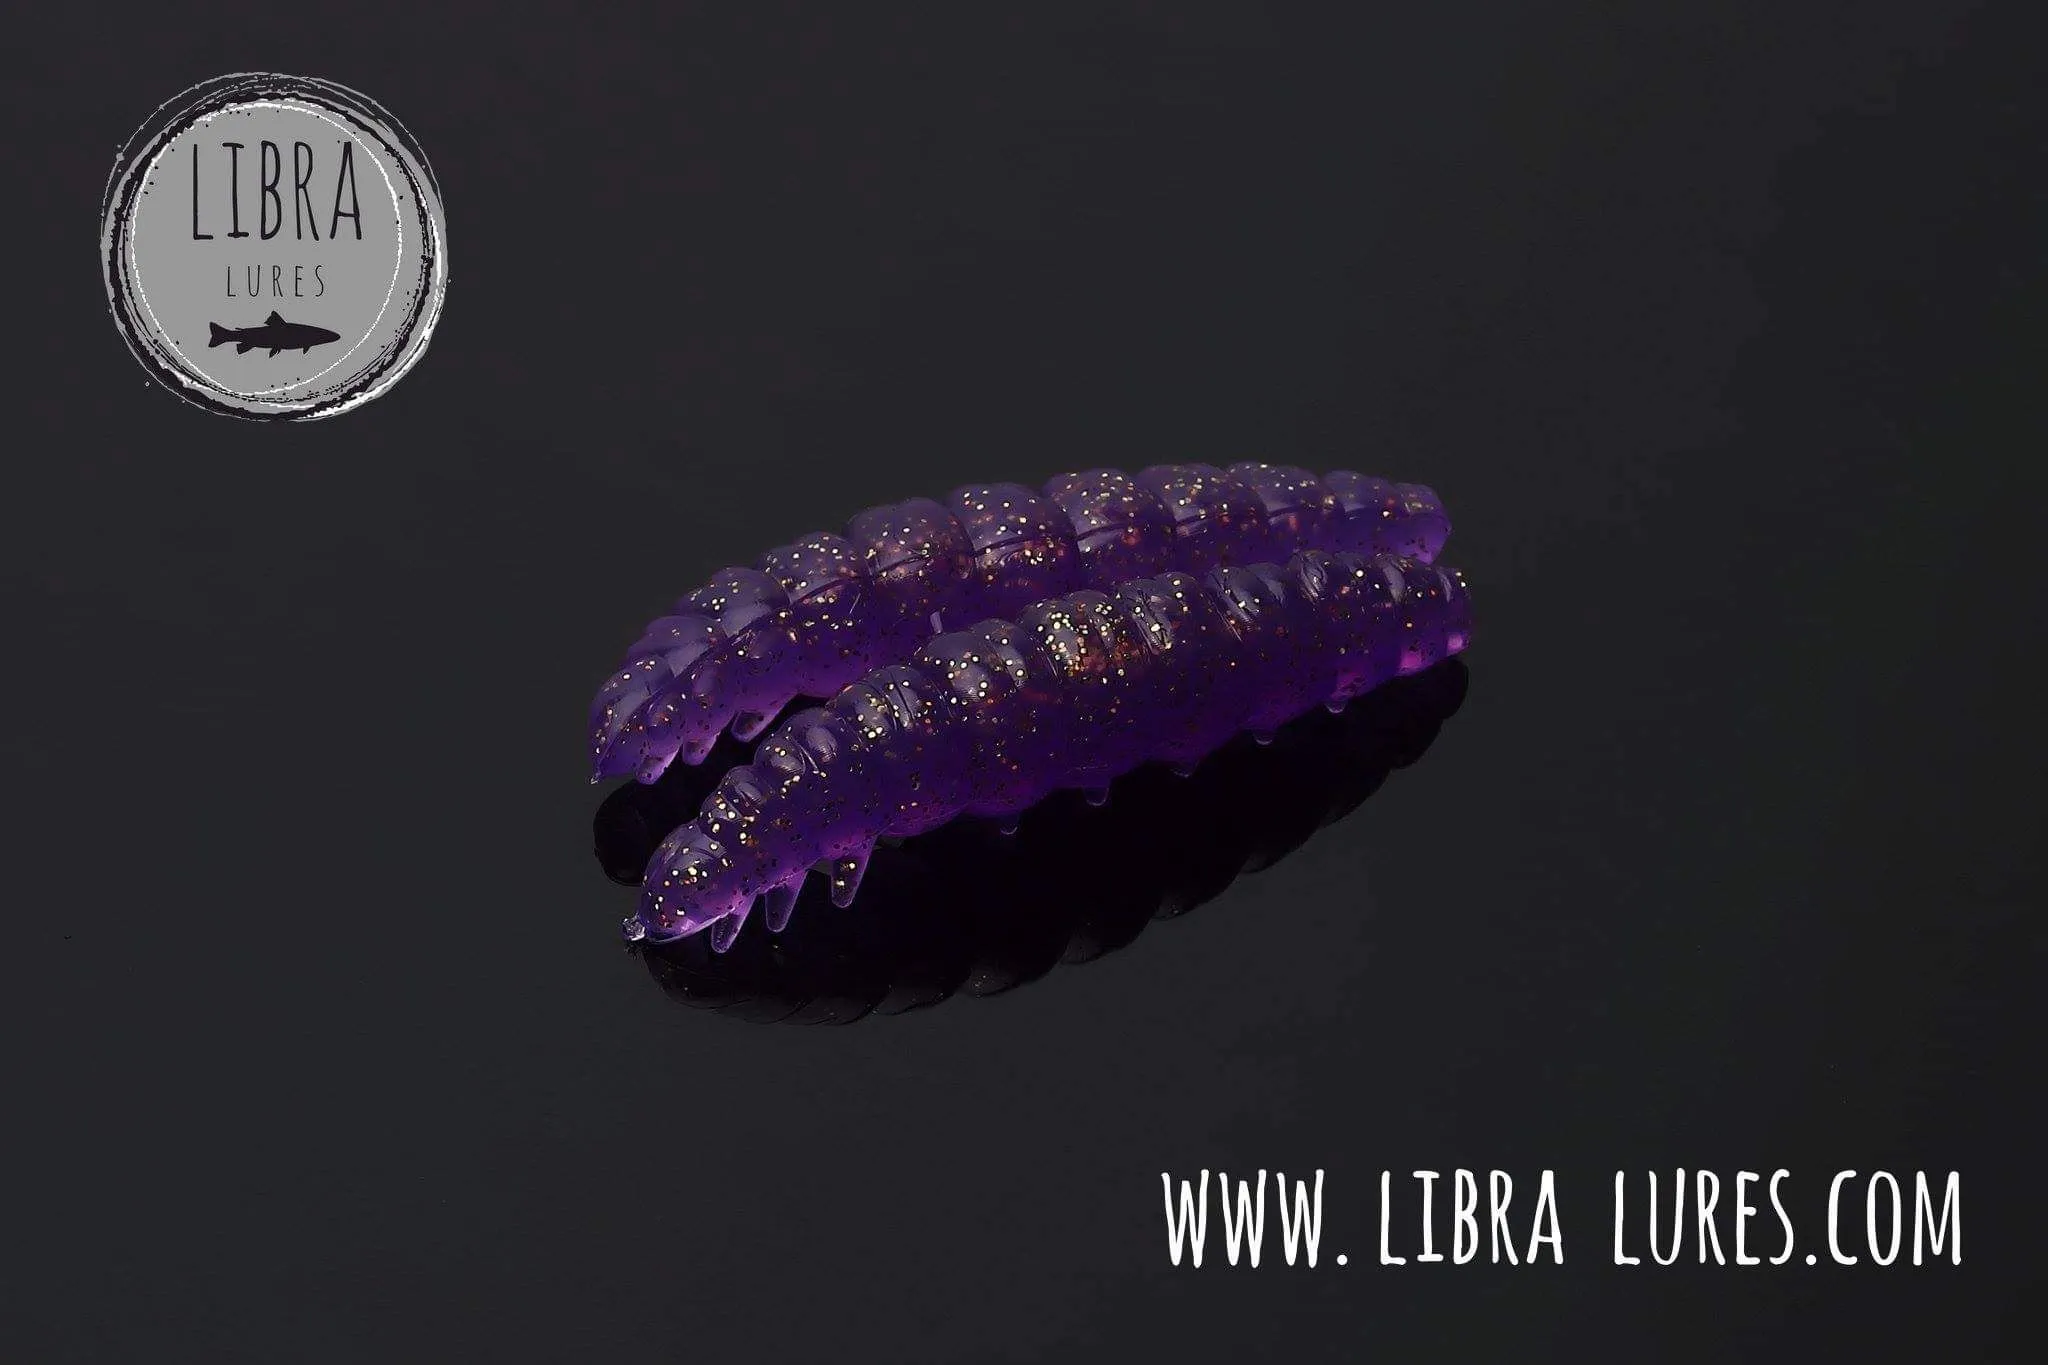 Libra Lures Larva 45mm | Forellenköder Supersoft | Inhalt: 8 Stück | Aroma: Käse | Farbe: 020 / Purple With Glitter